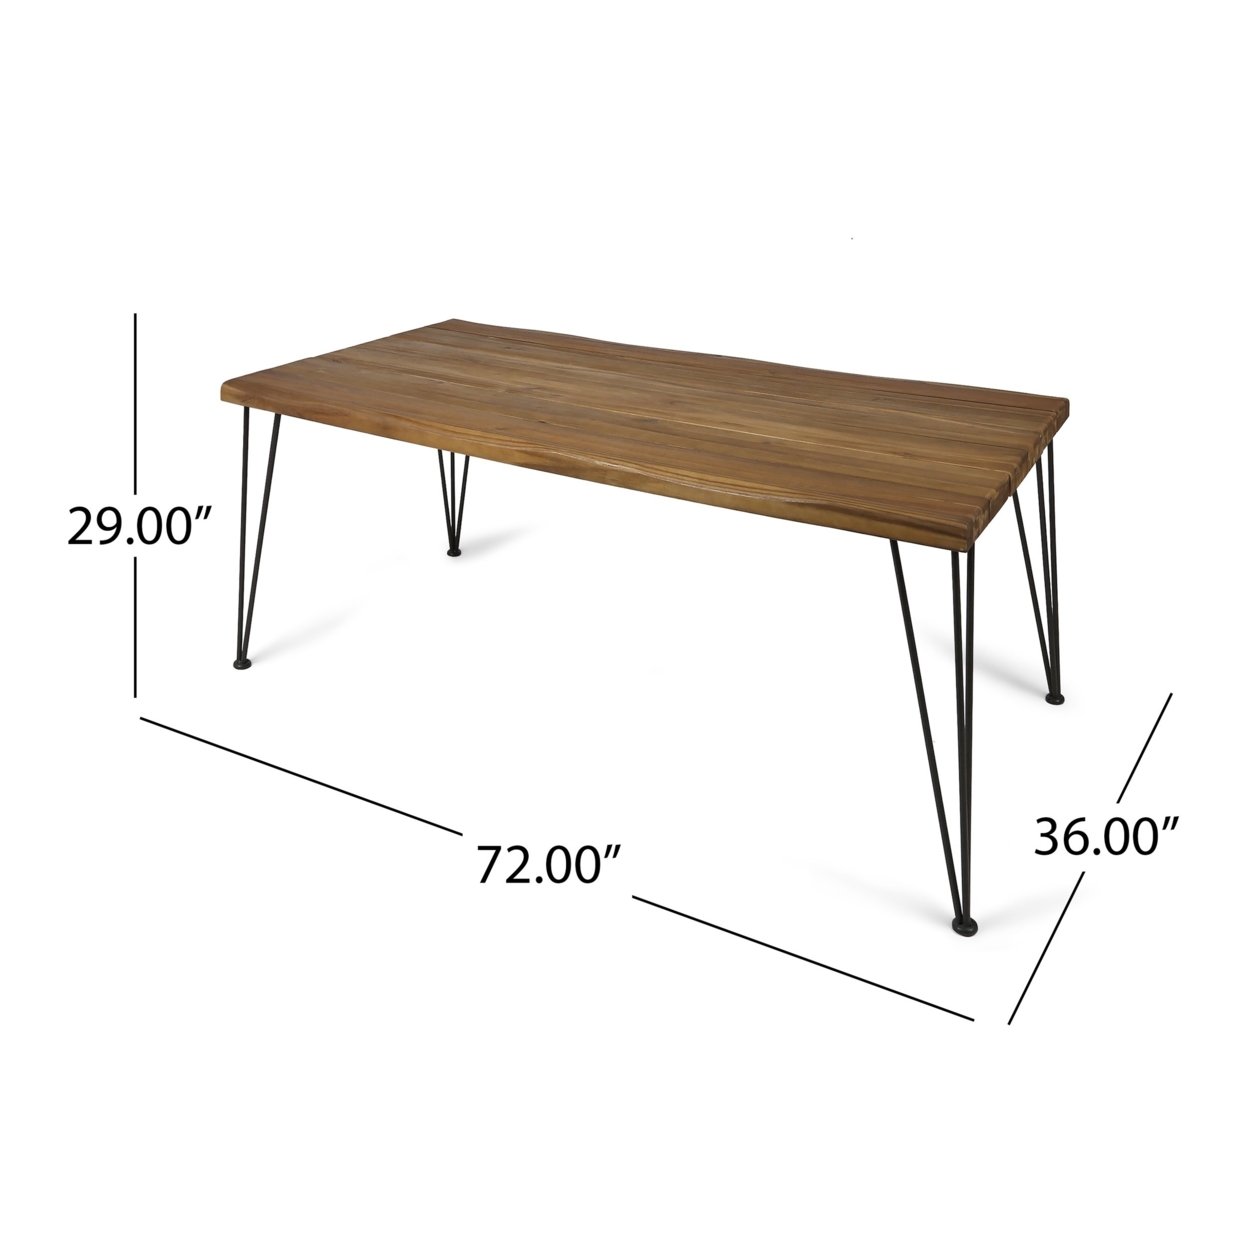 Kama Patio Dining Table, Rectangular, 72, Acacia Wood Table Top, Rustic Iron Hairpin Legs, Teak Finish